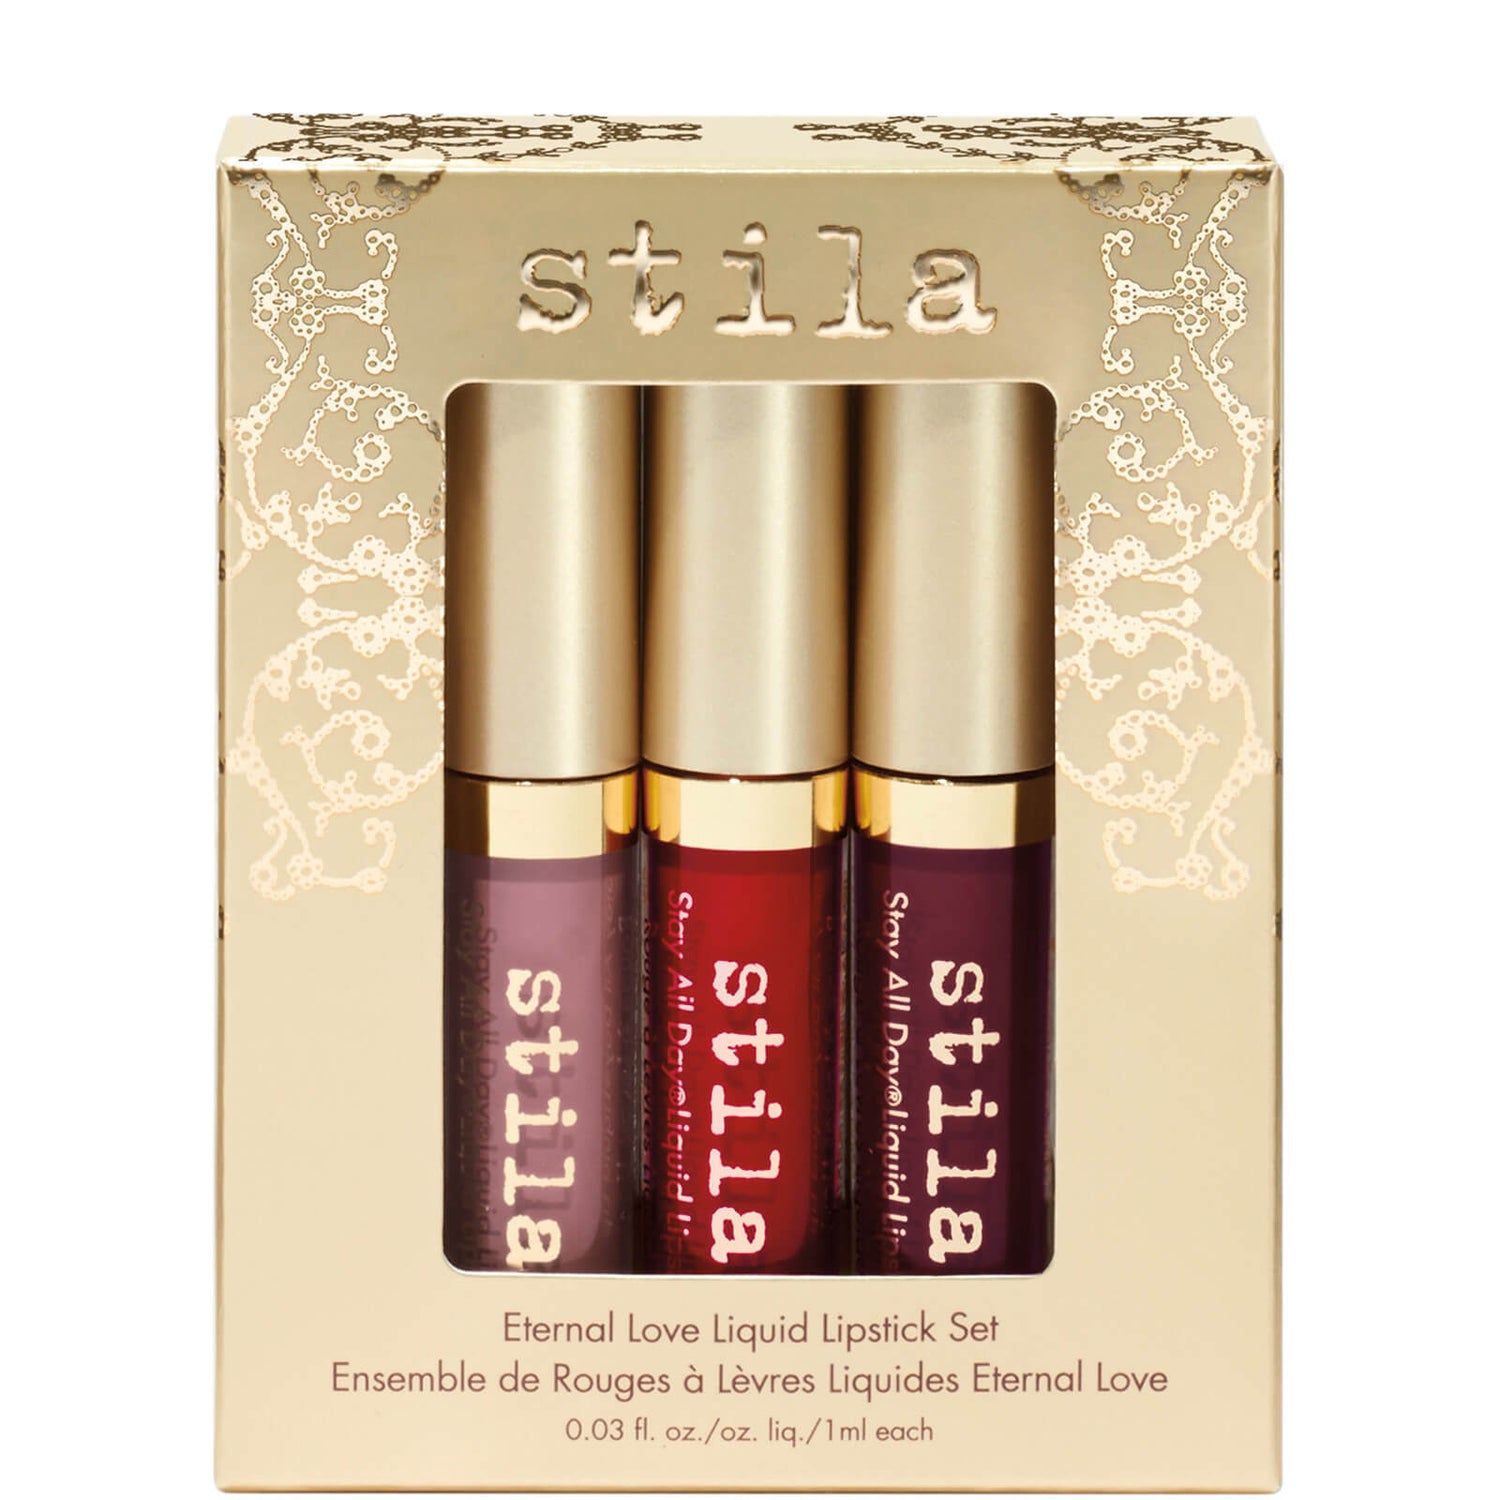 Stila Eternal Love Liquid Lipstick Set (3 x Deluxe Stay All Day Liquid Lipsticks) - Worth £33.00